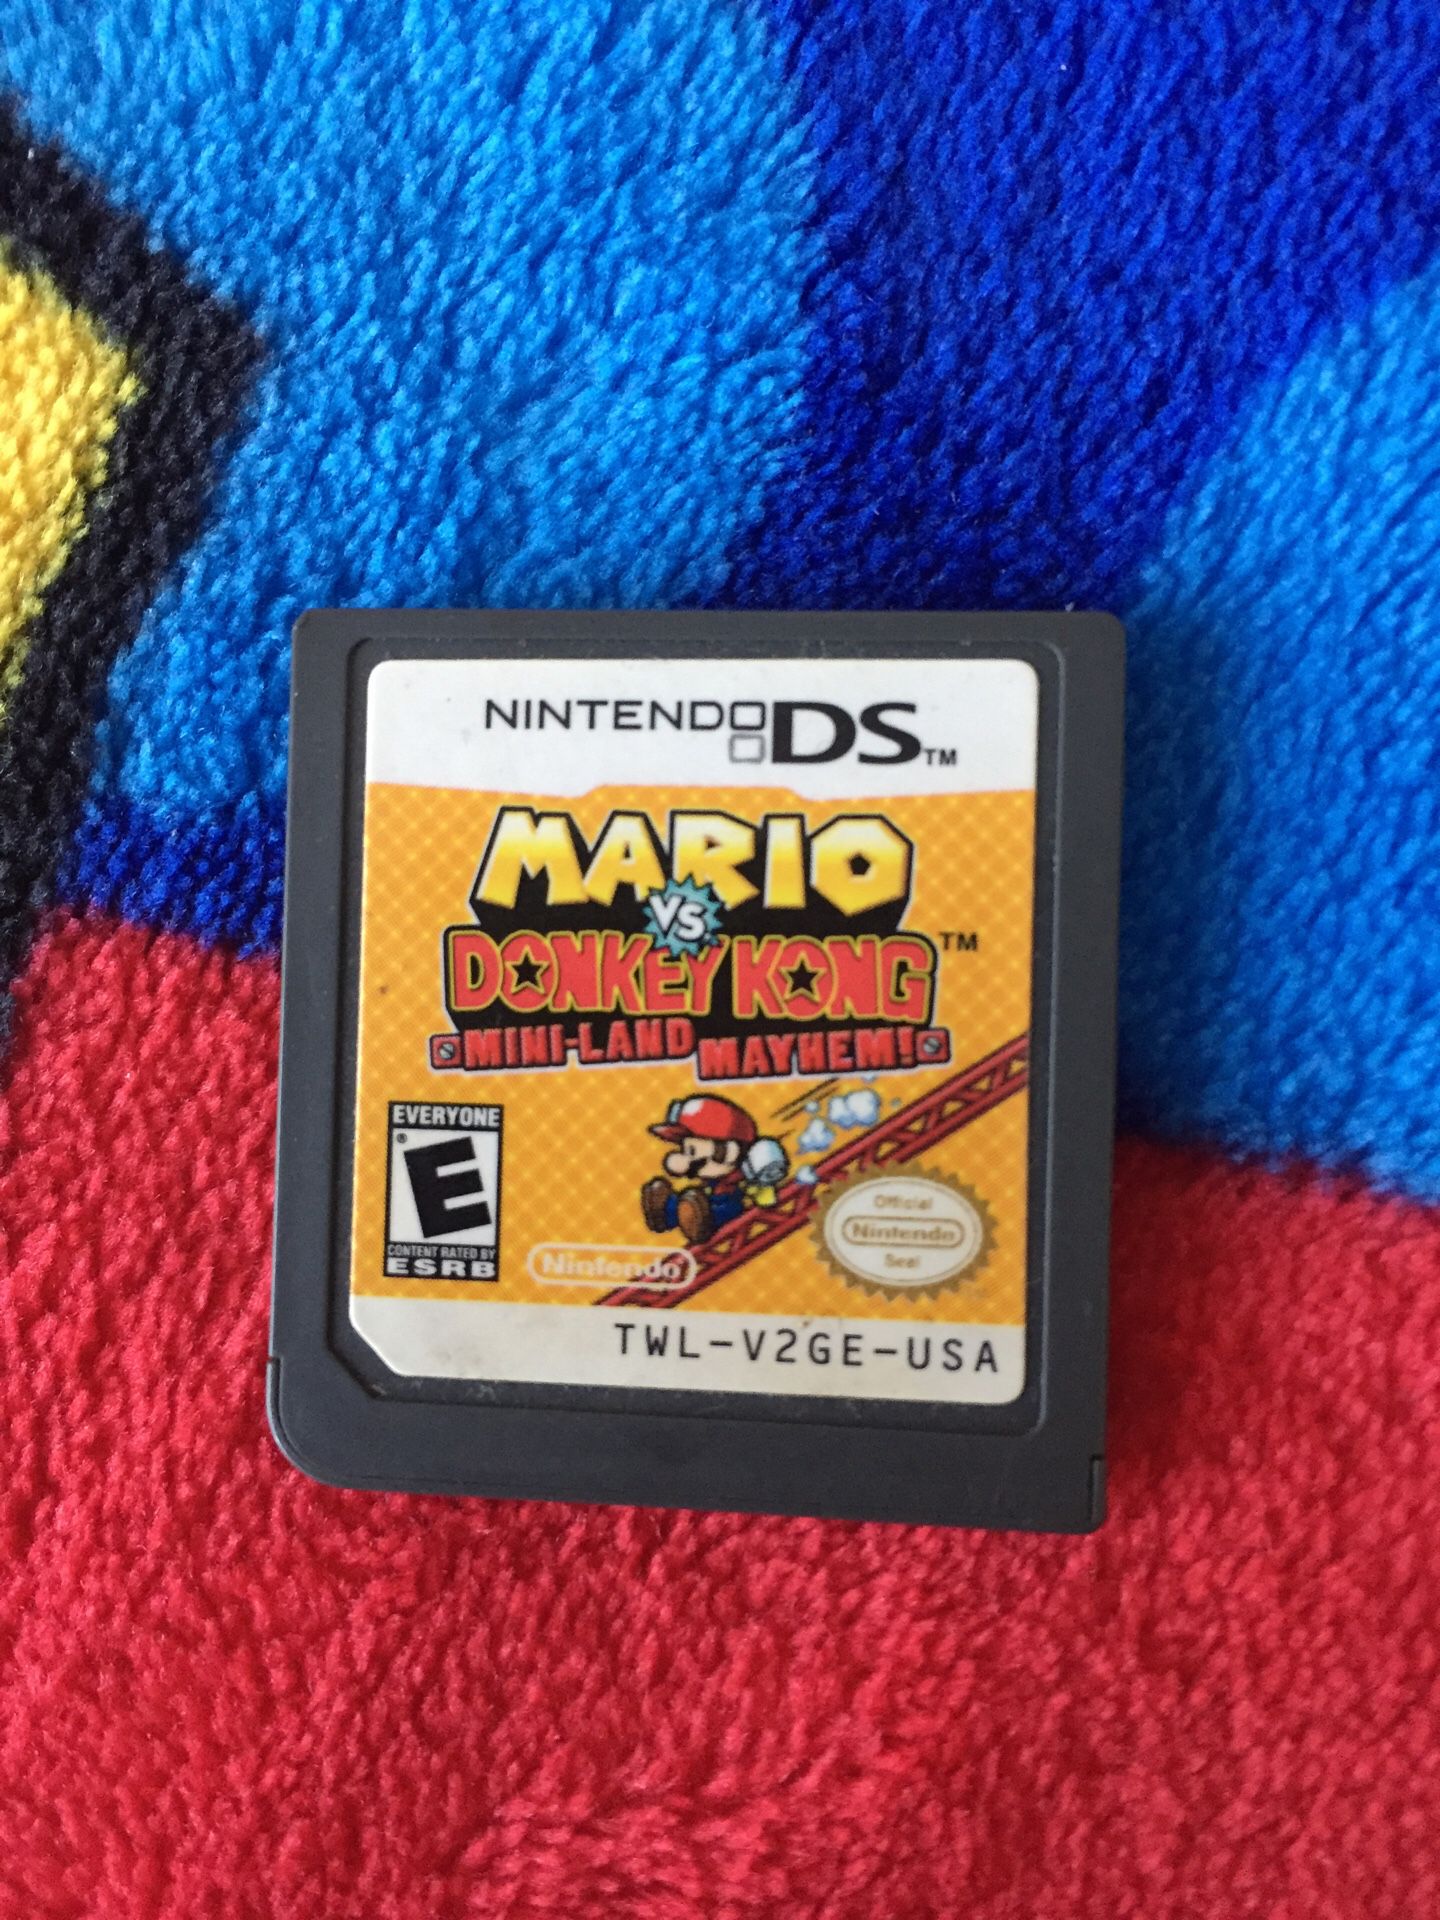 Cartucho Mario vs Donkey Kong para Nintendo DS